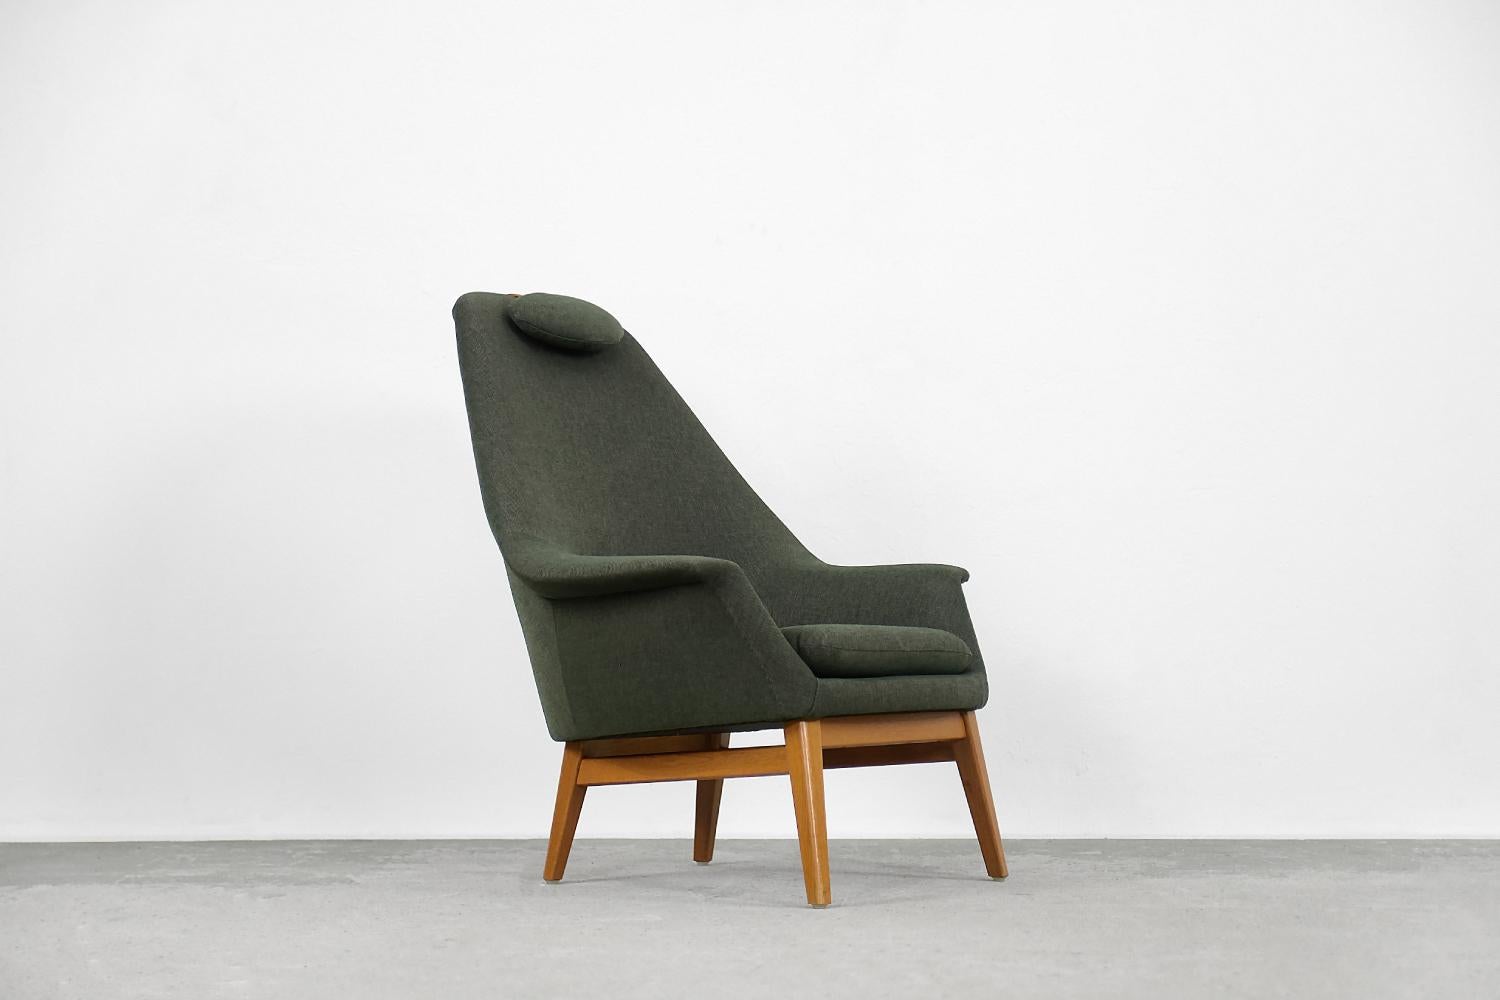 Mid-20th Century Vintage Scandinavian Modern Armchair in Green fabric and Beech wood legs, 1950s.